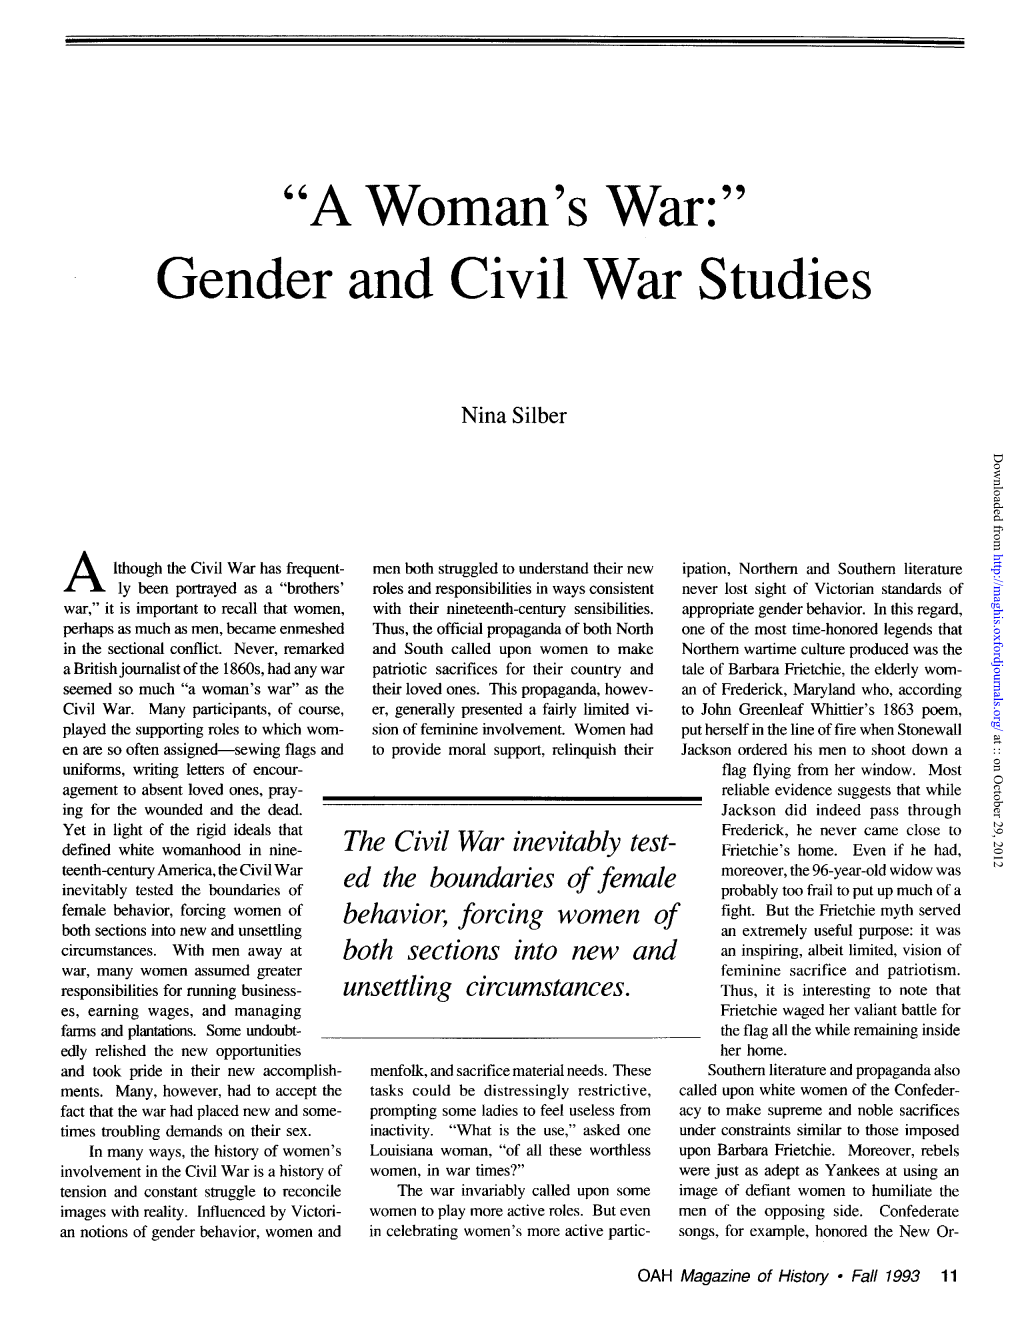 "A Woman's War:" Gender and Civil War Studies